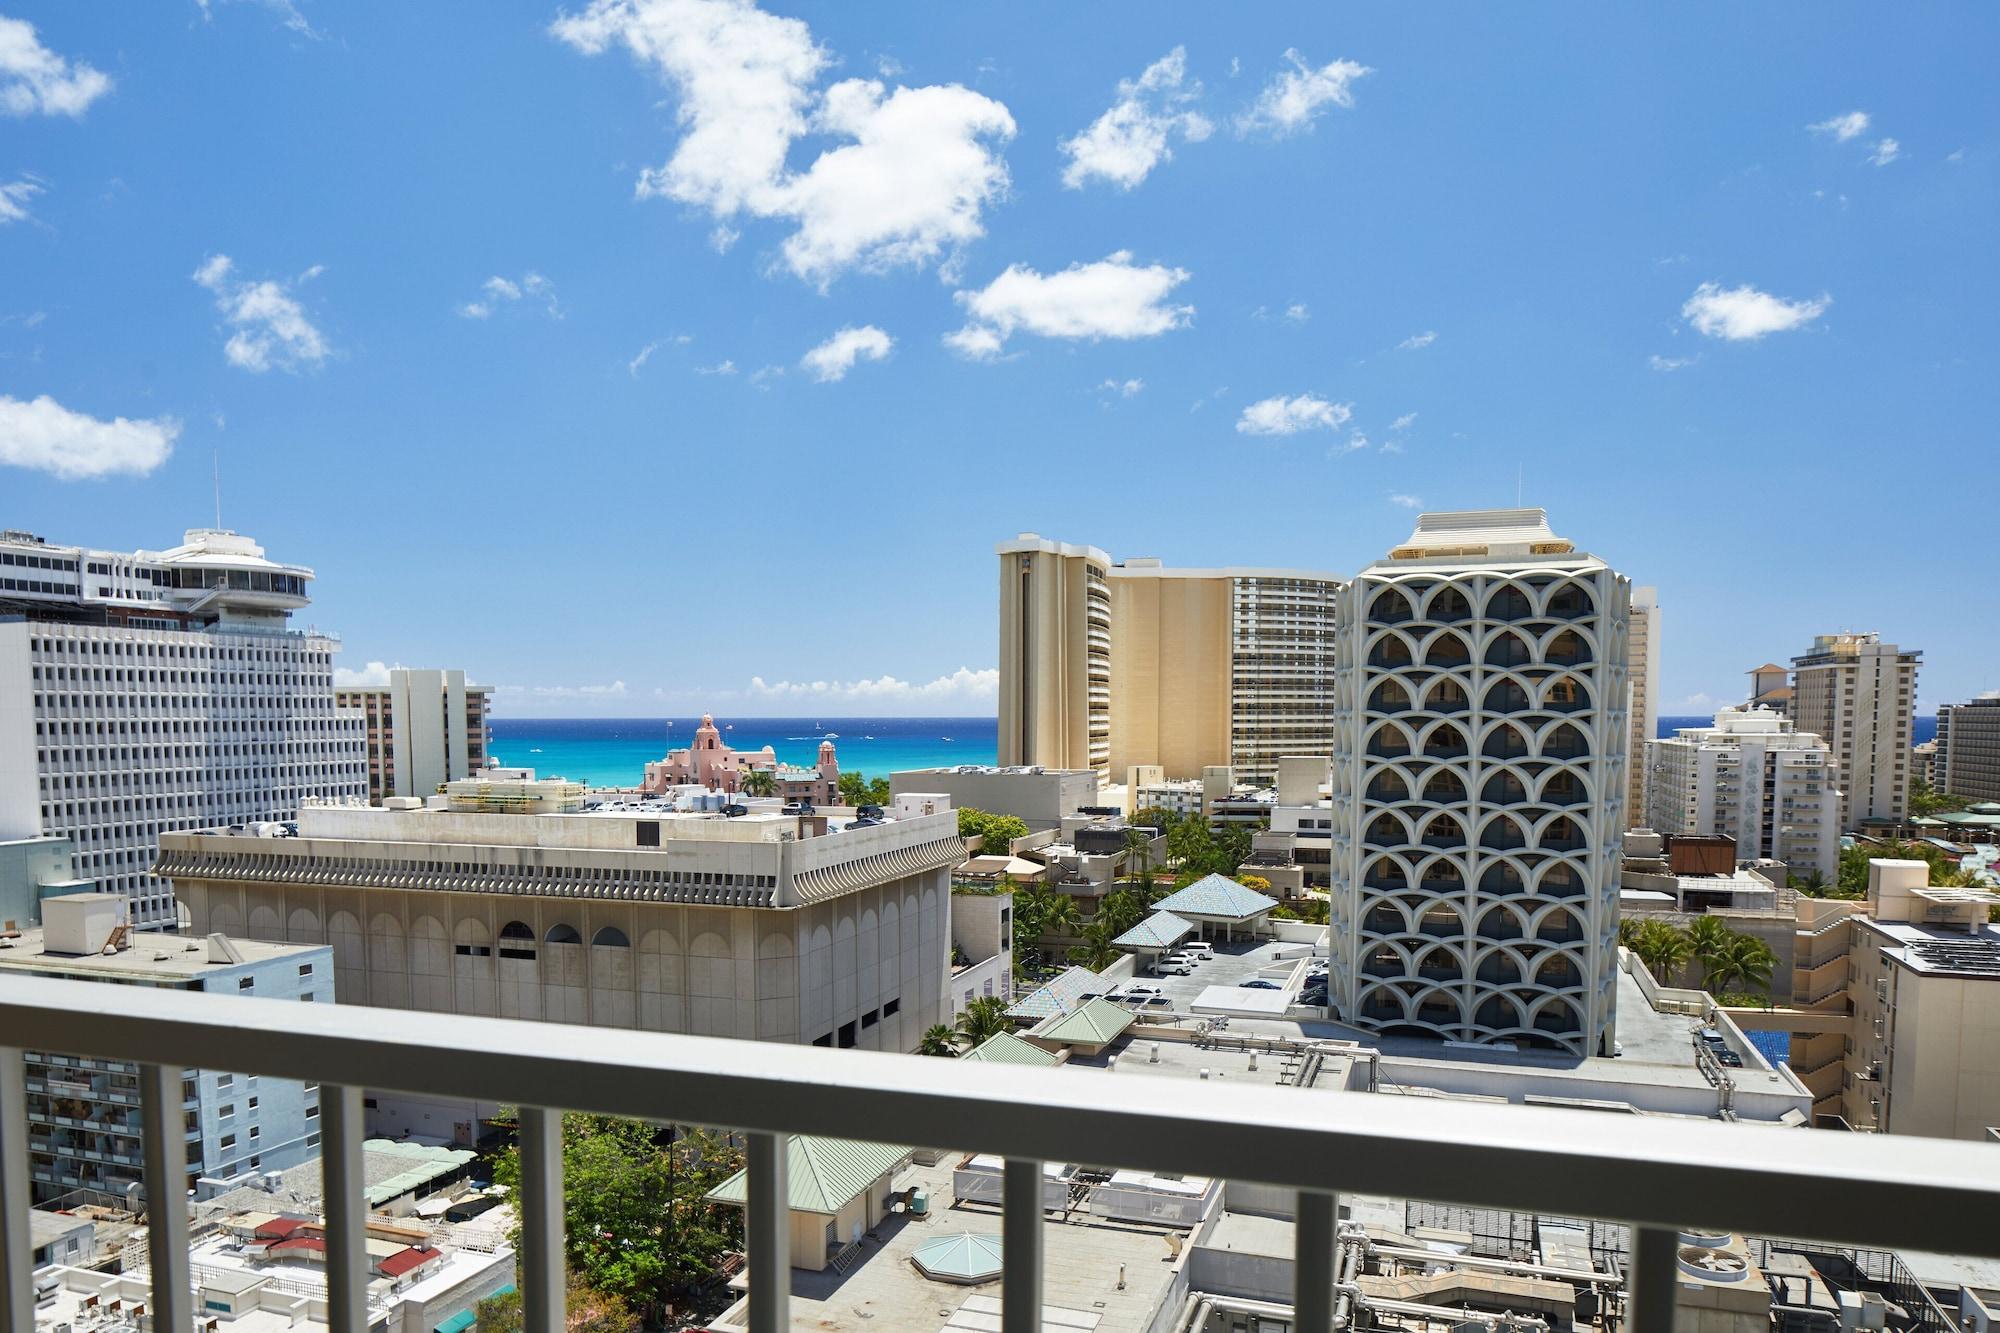 Waikiki Malia Hotel Honolulu Exterior foto